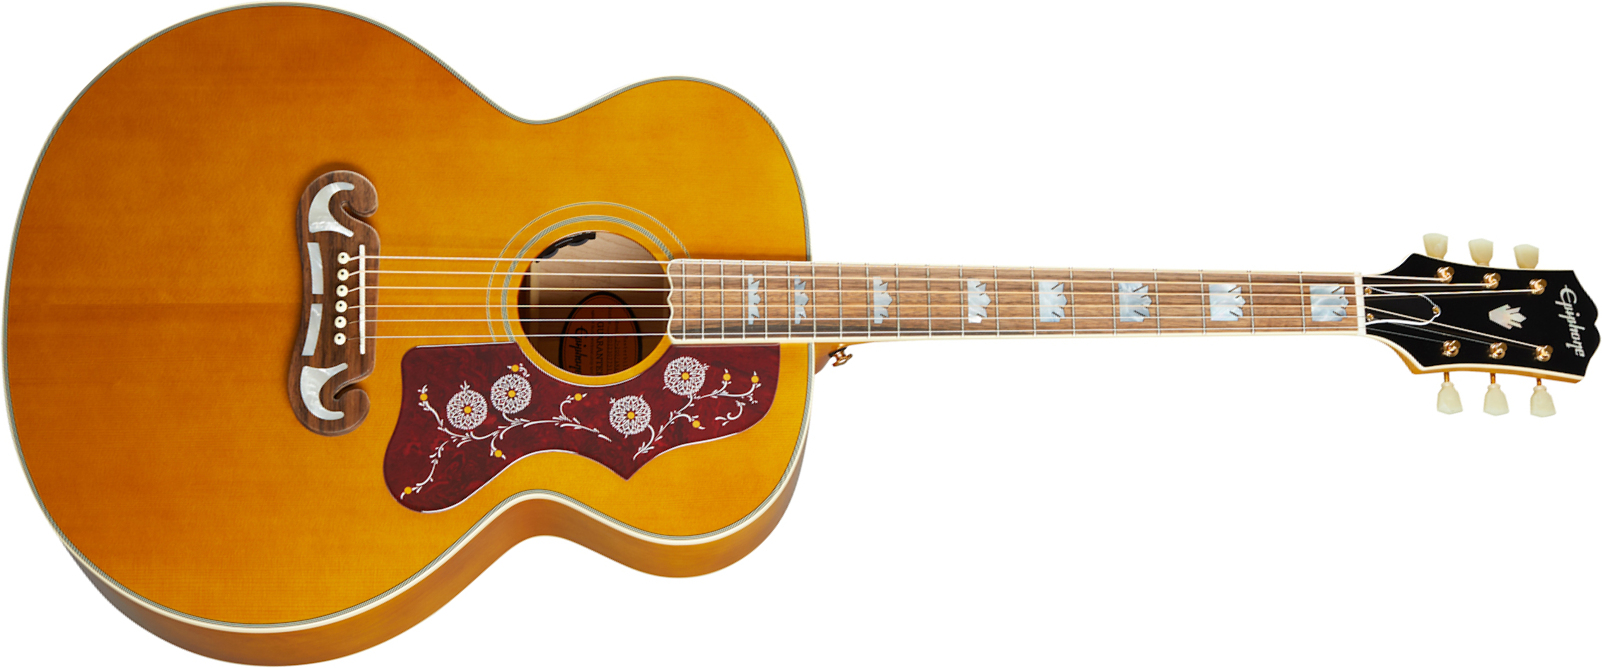 Epiphone J-200 Inspired By Gibson Jumbo Epicea Erable Lau - Aged Antique Natural - Elektroakustische Gitarre - Main picture